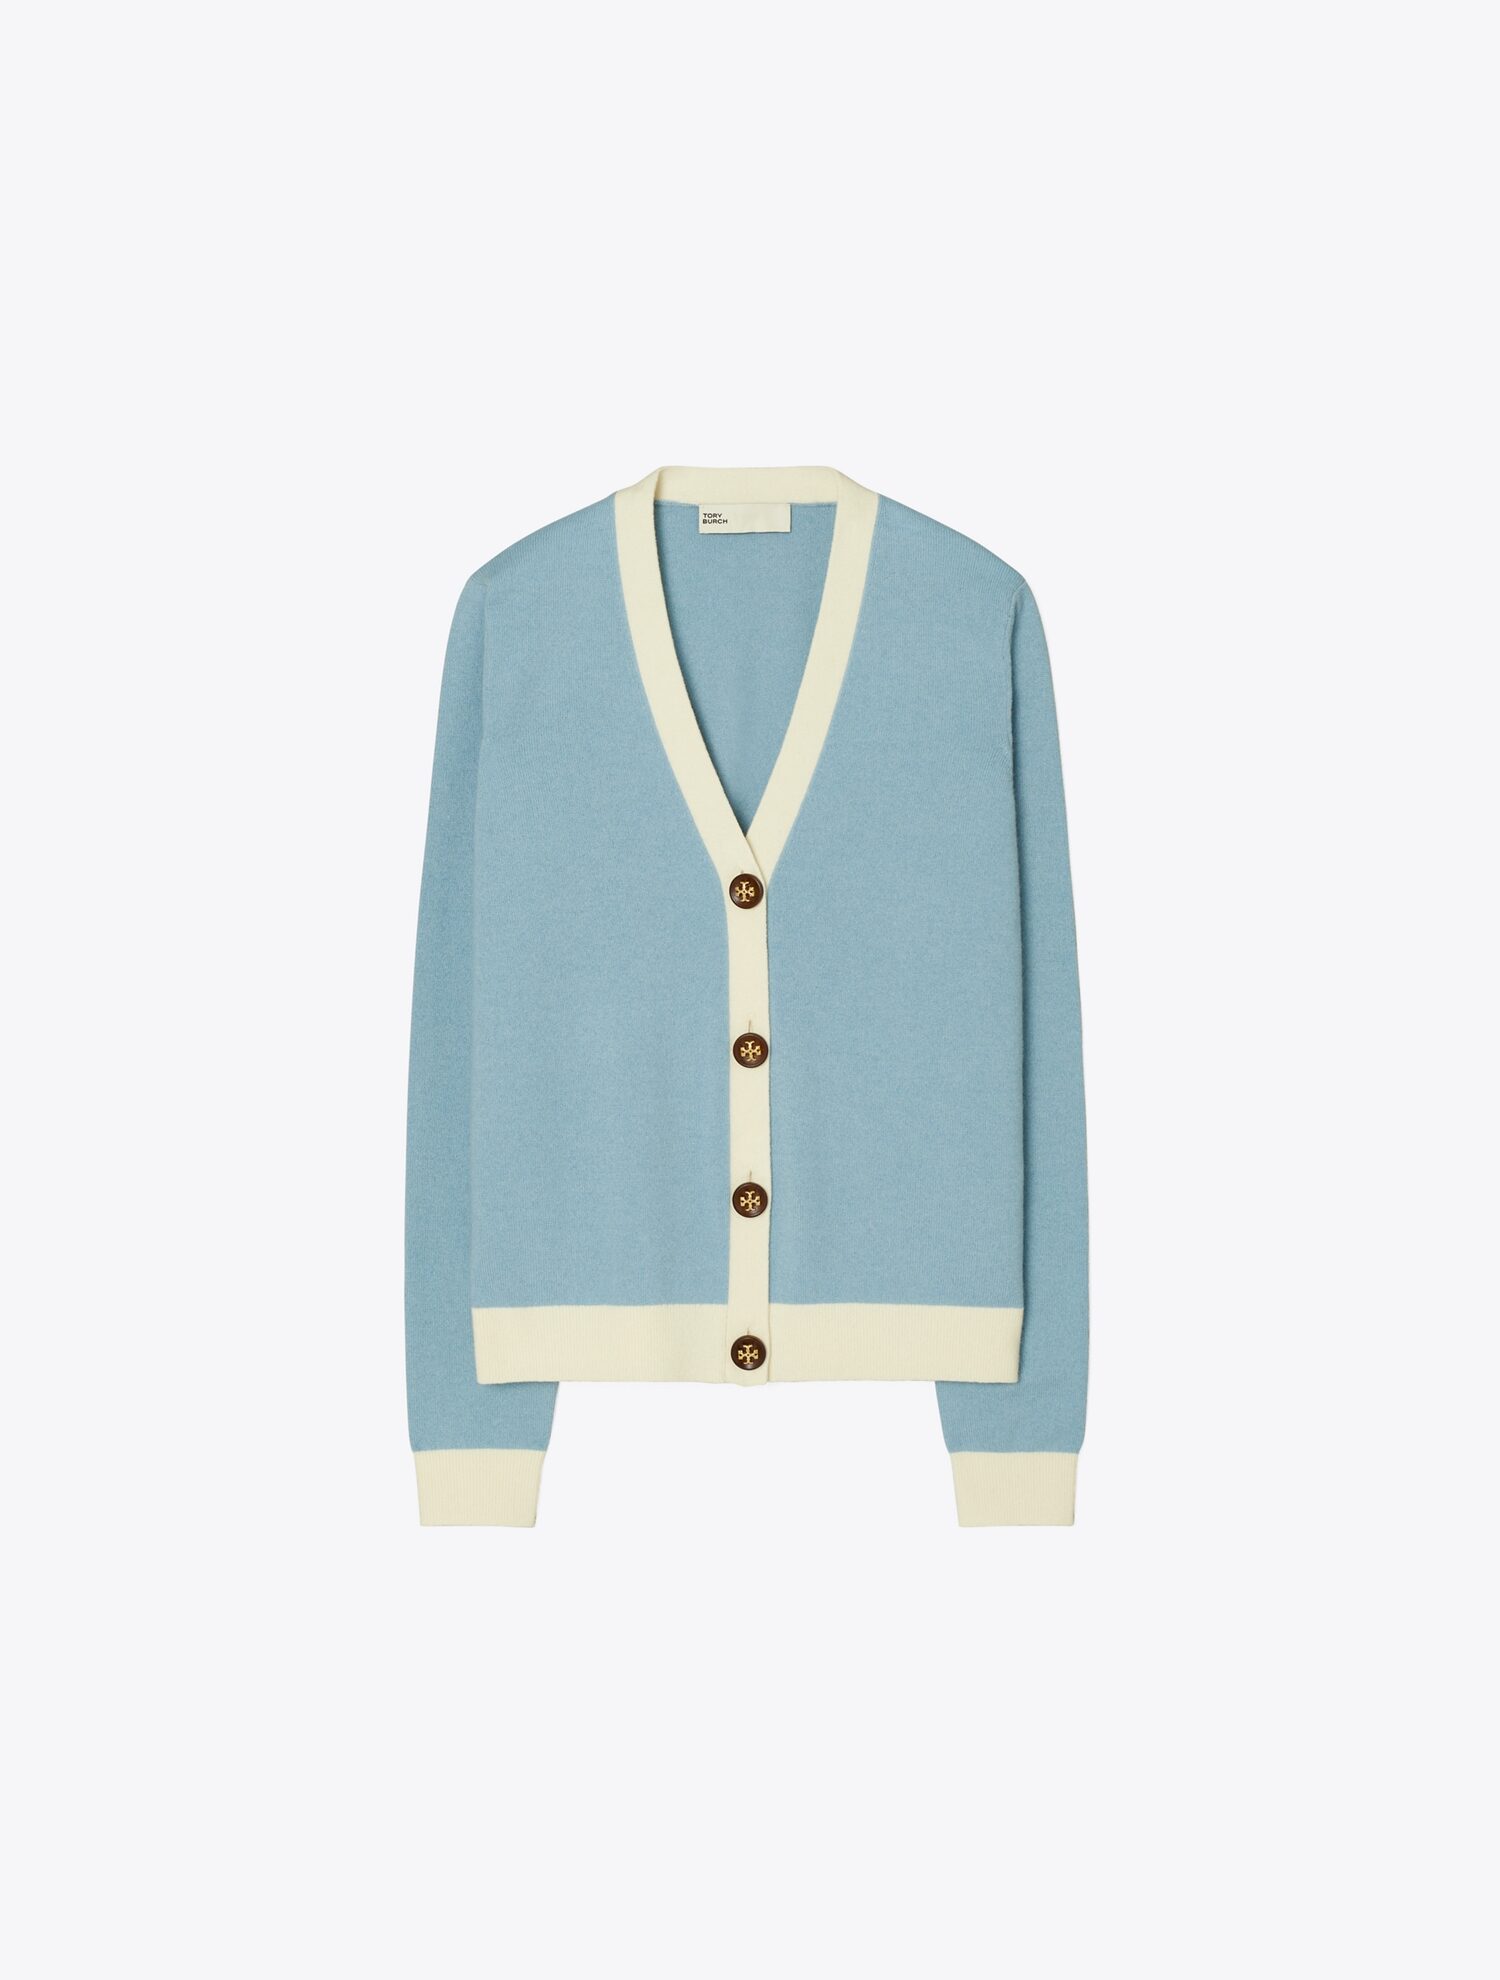 TORY BURCH-Colorblock Cashmere Cardigan - Midday Blue / Soft Ivory│삼성물산  온라인몰 SSF Shop